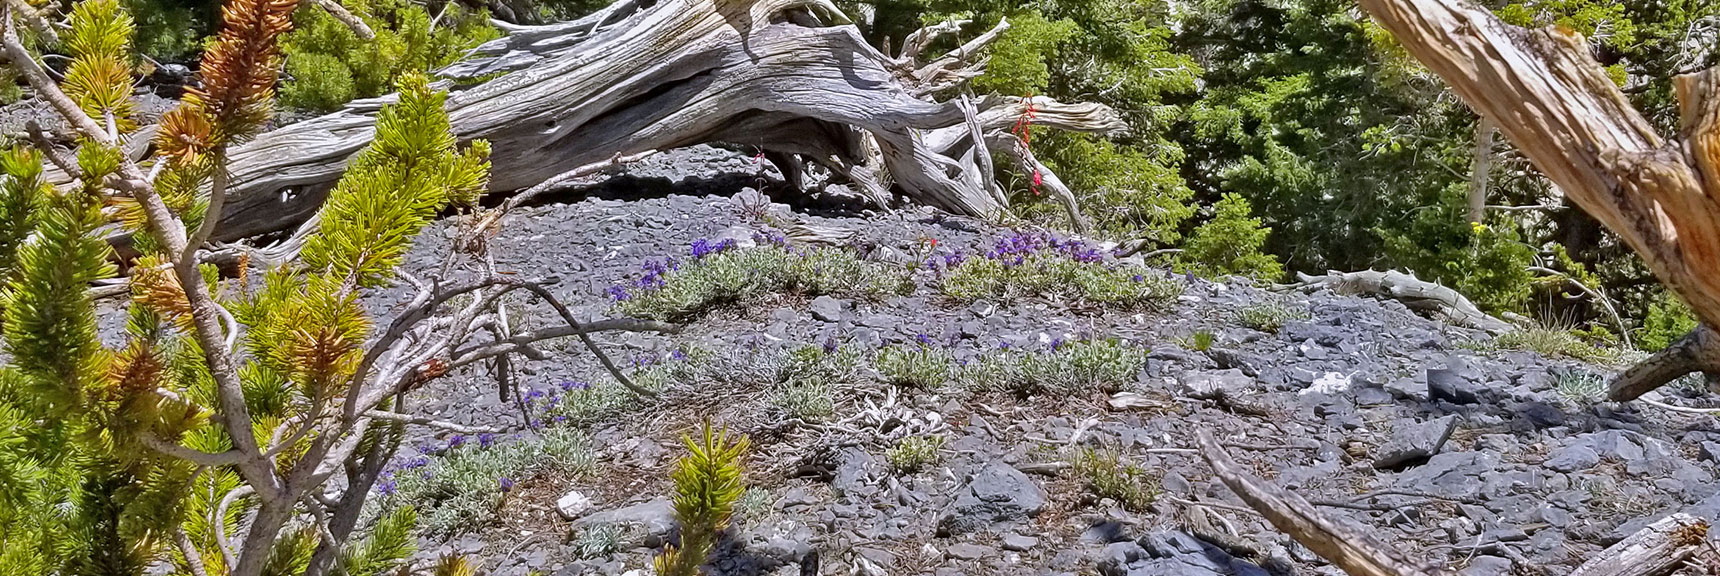 Wild Flowers on the High Ridge | Black Rock Sister | Mt Charleston Wilderness | Lee Canyon | Spring Mountains, Nevada